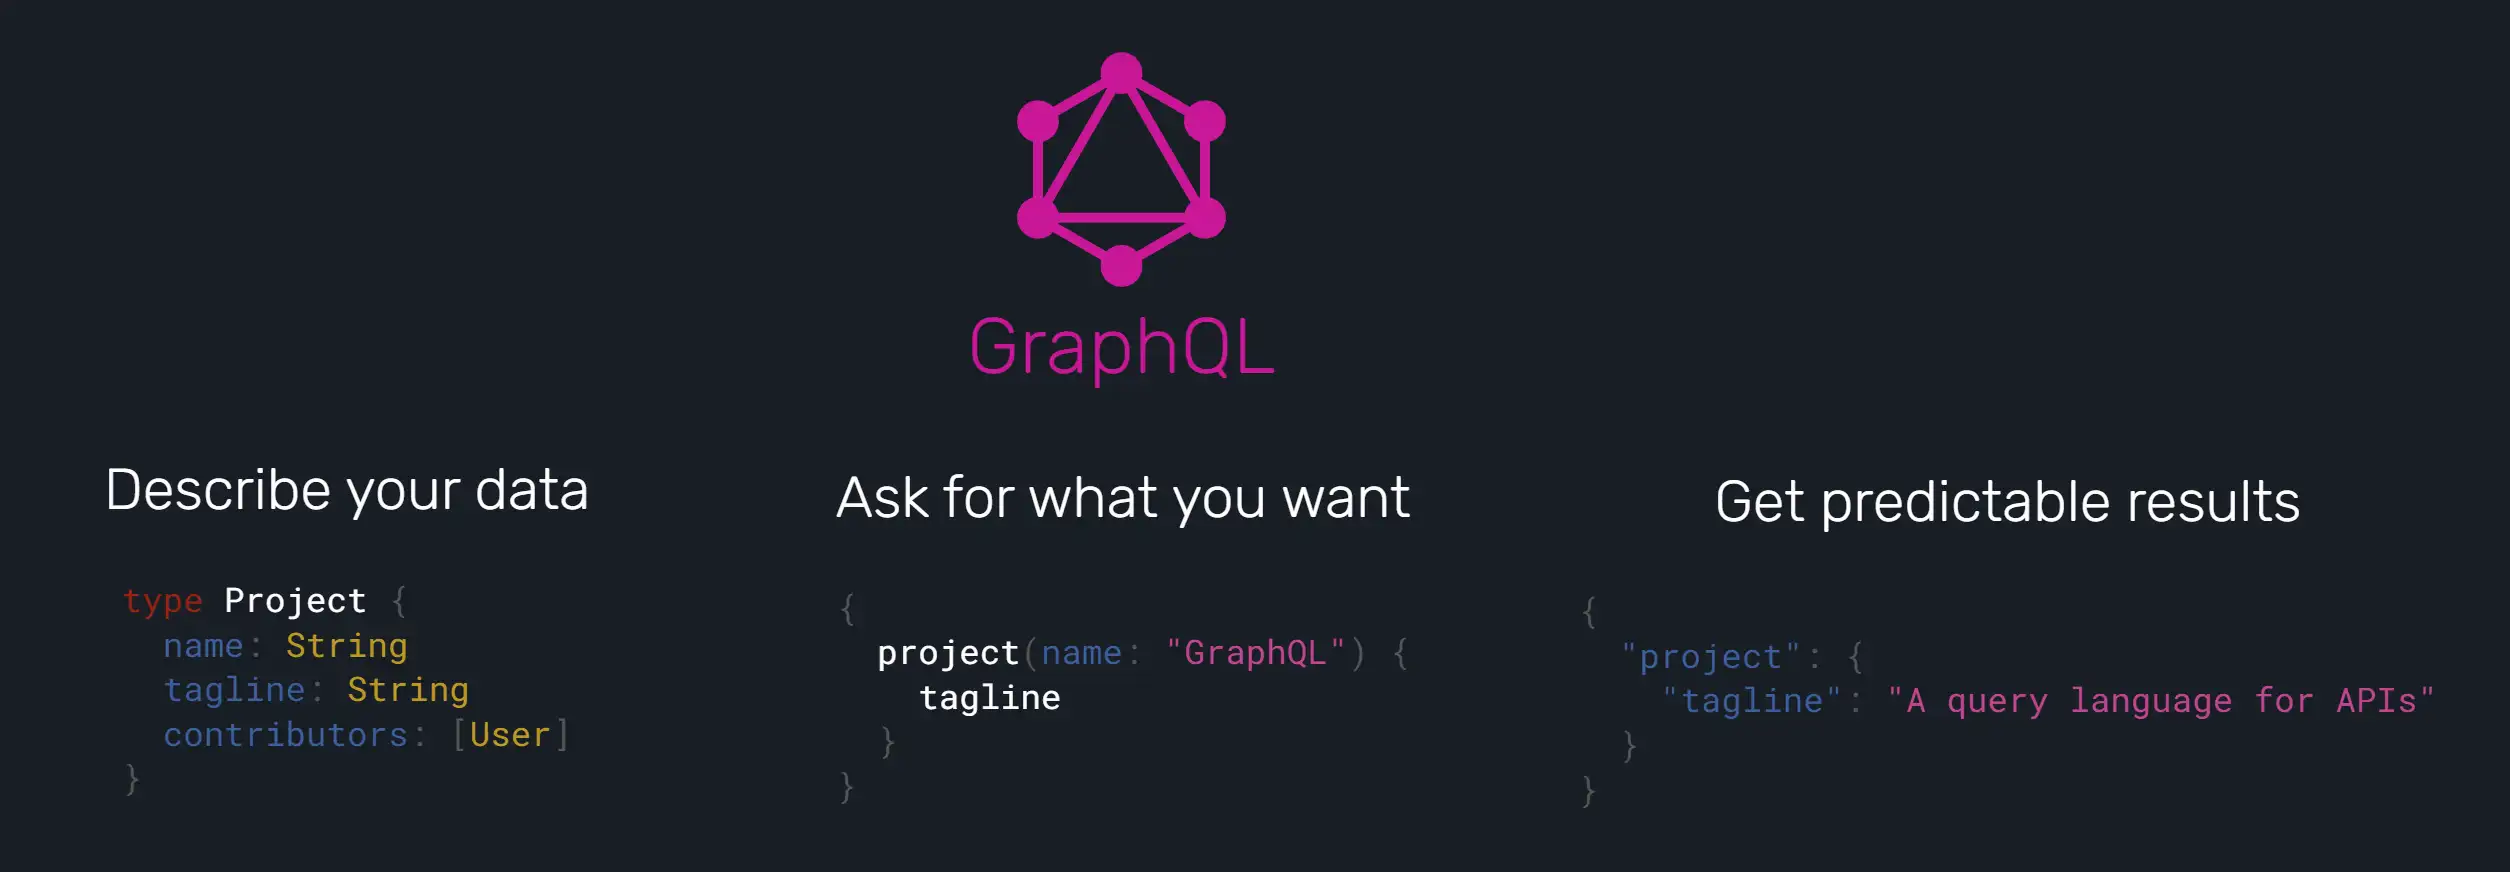 Steps explaining how GraphQL works